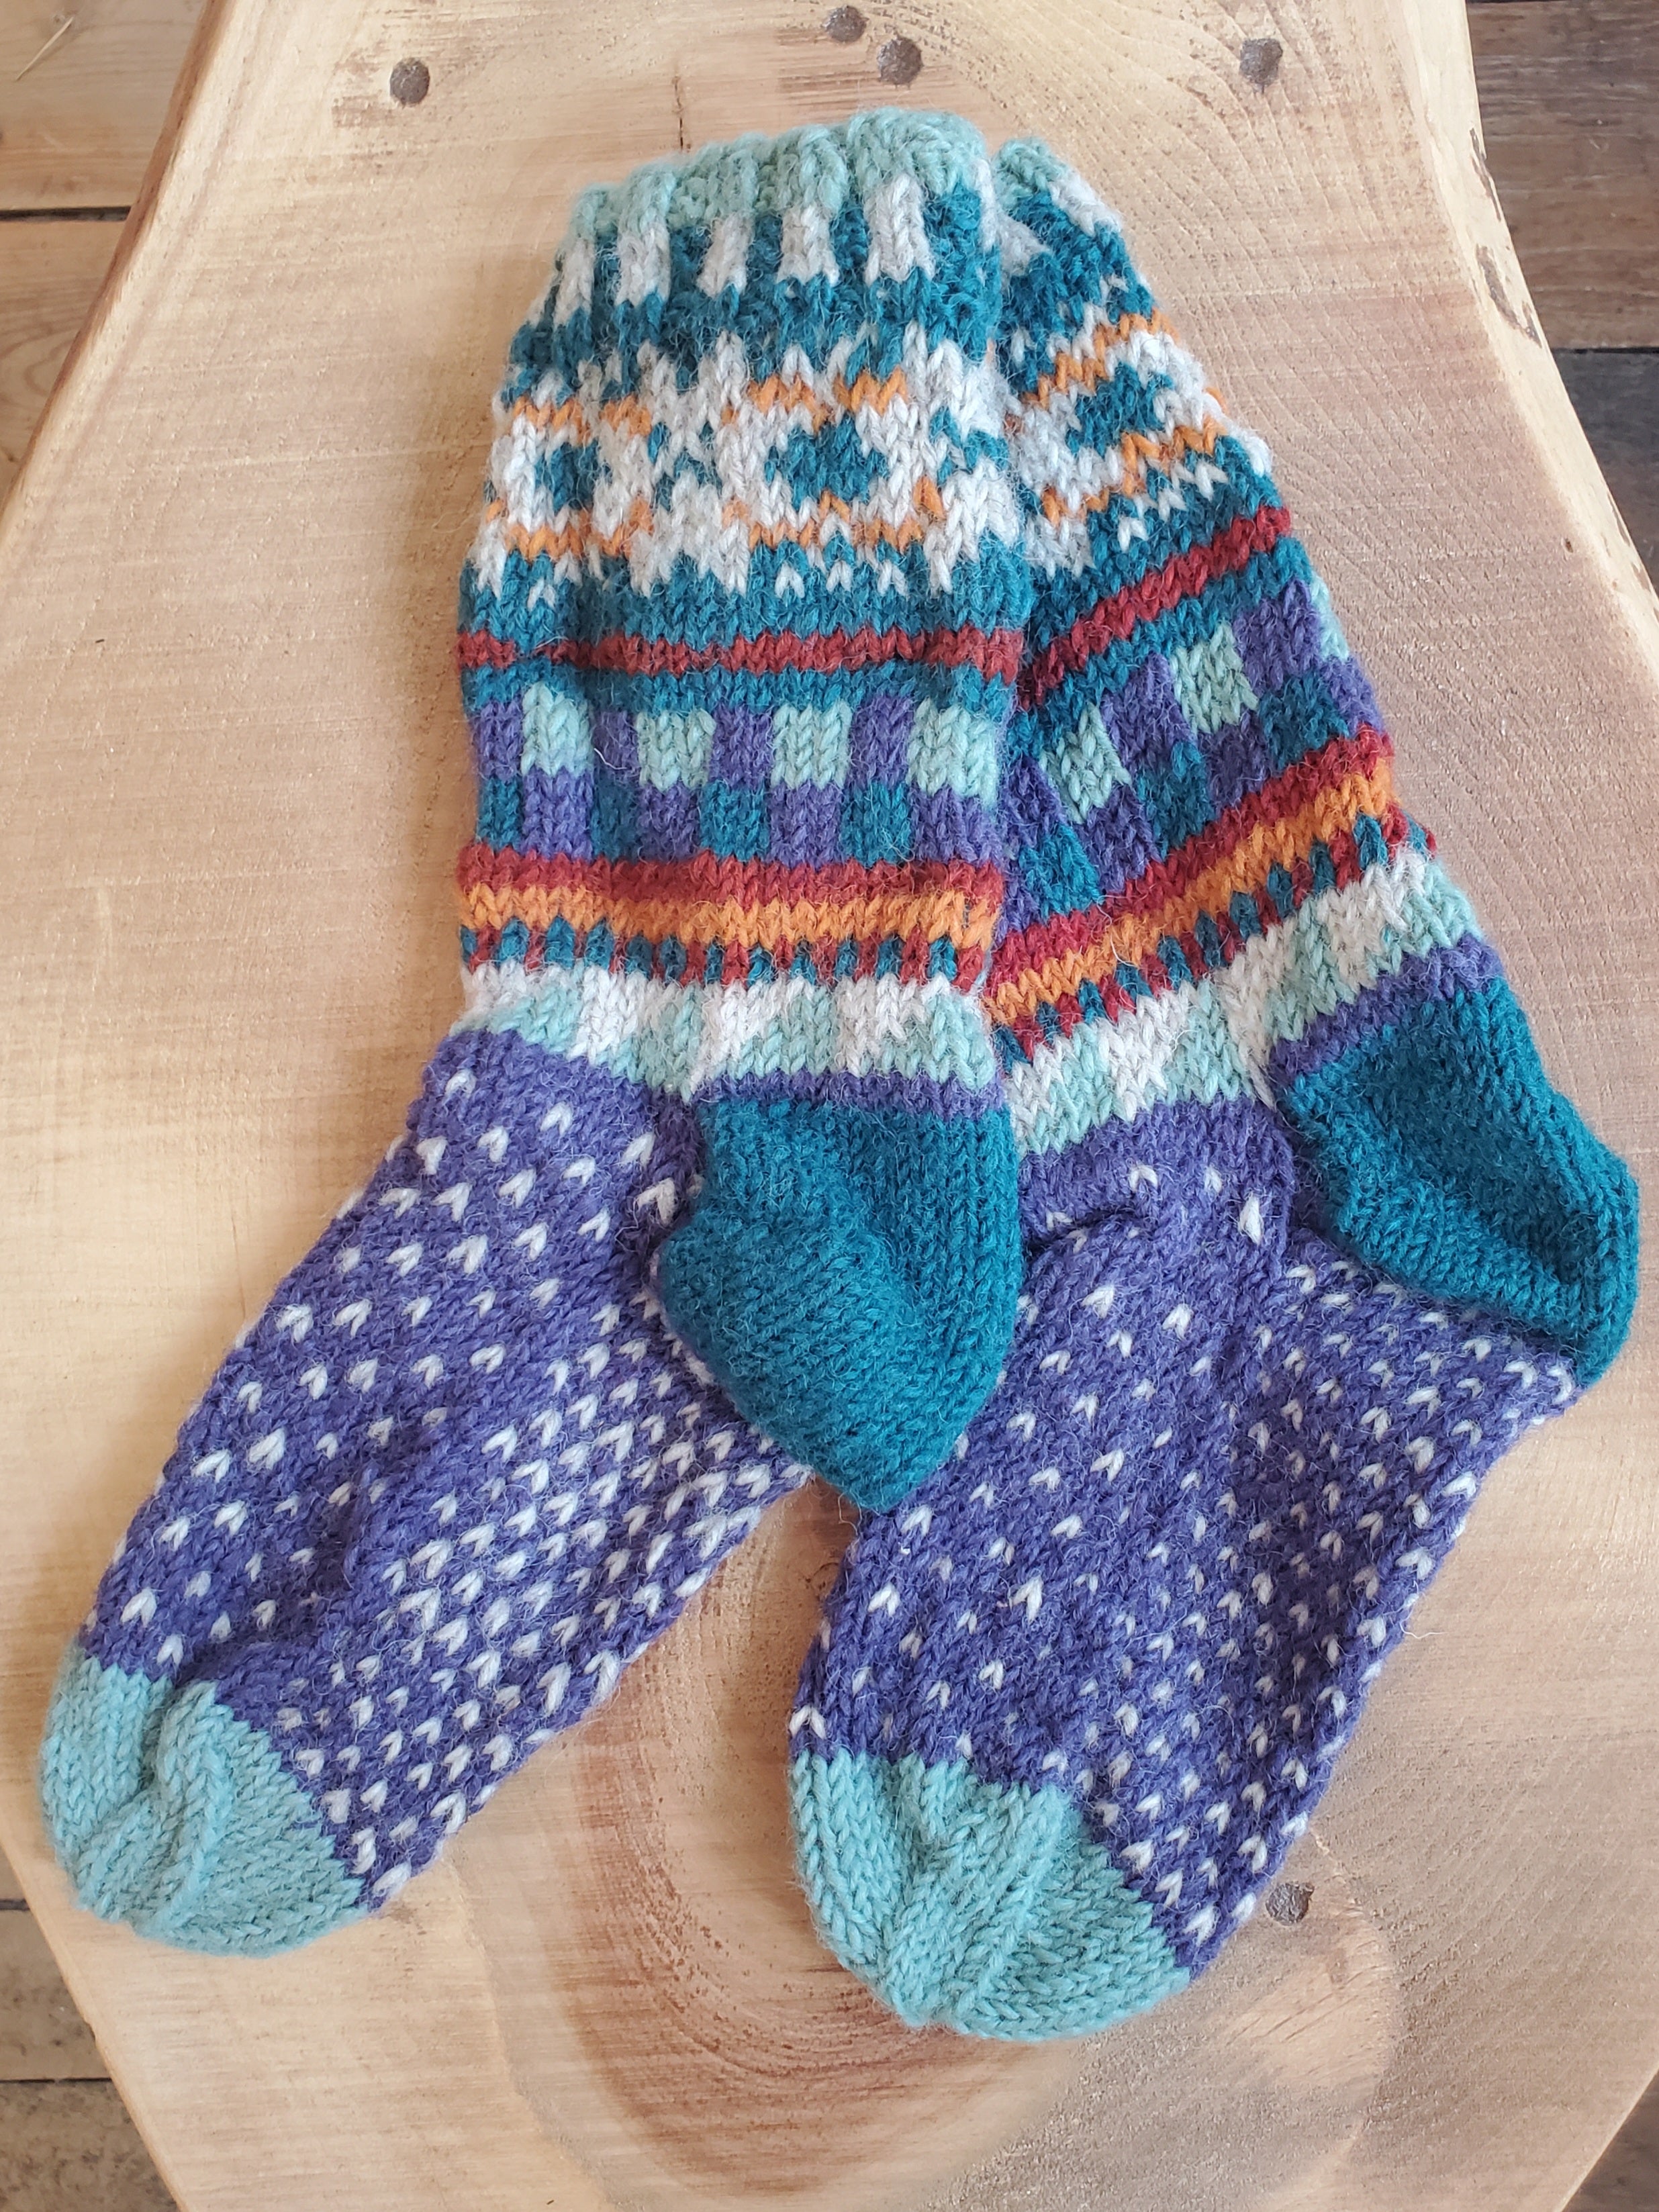 Hand Knit Socks